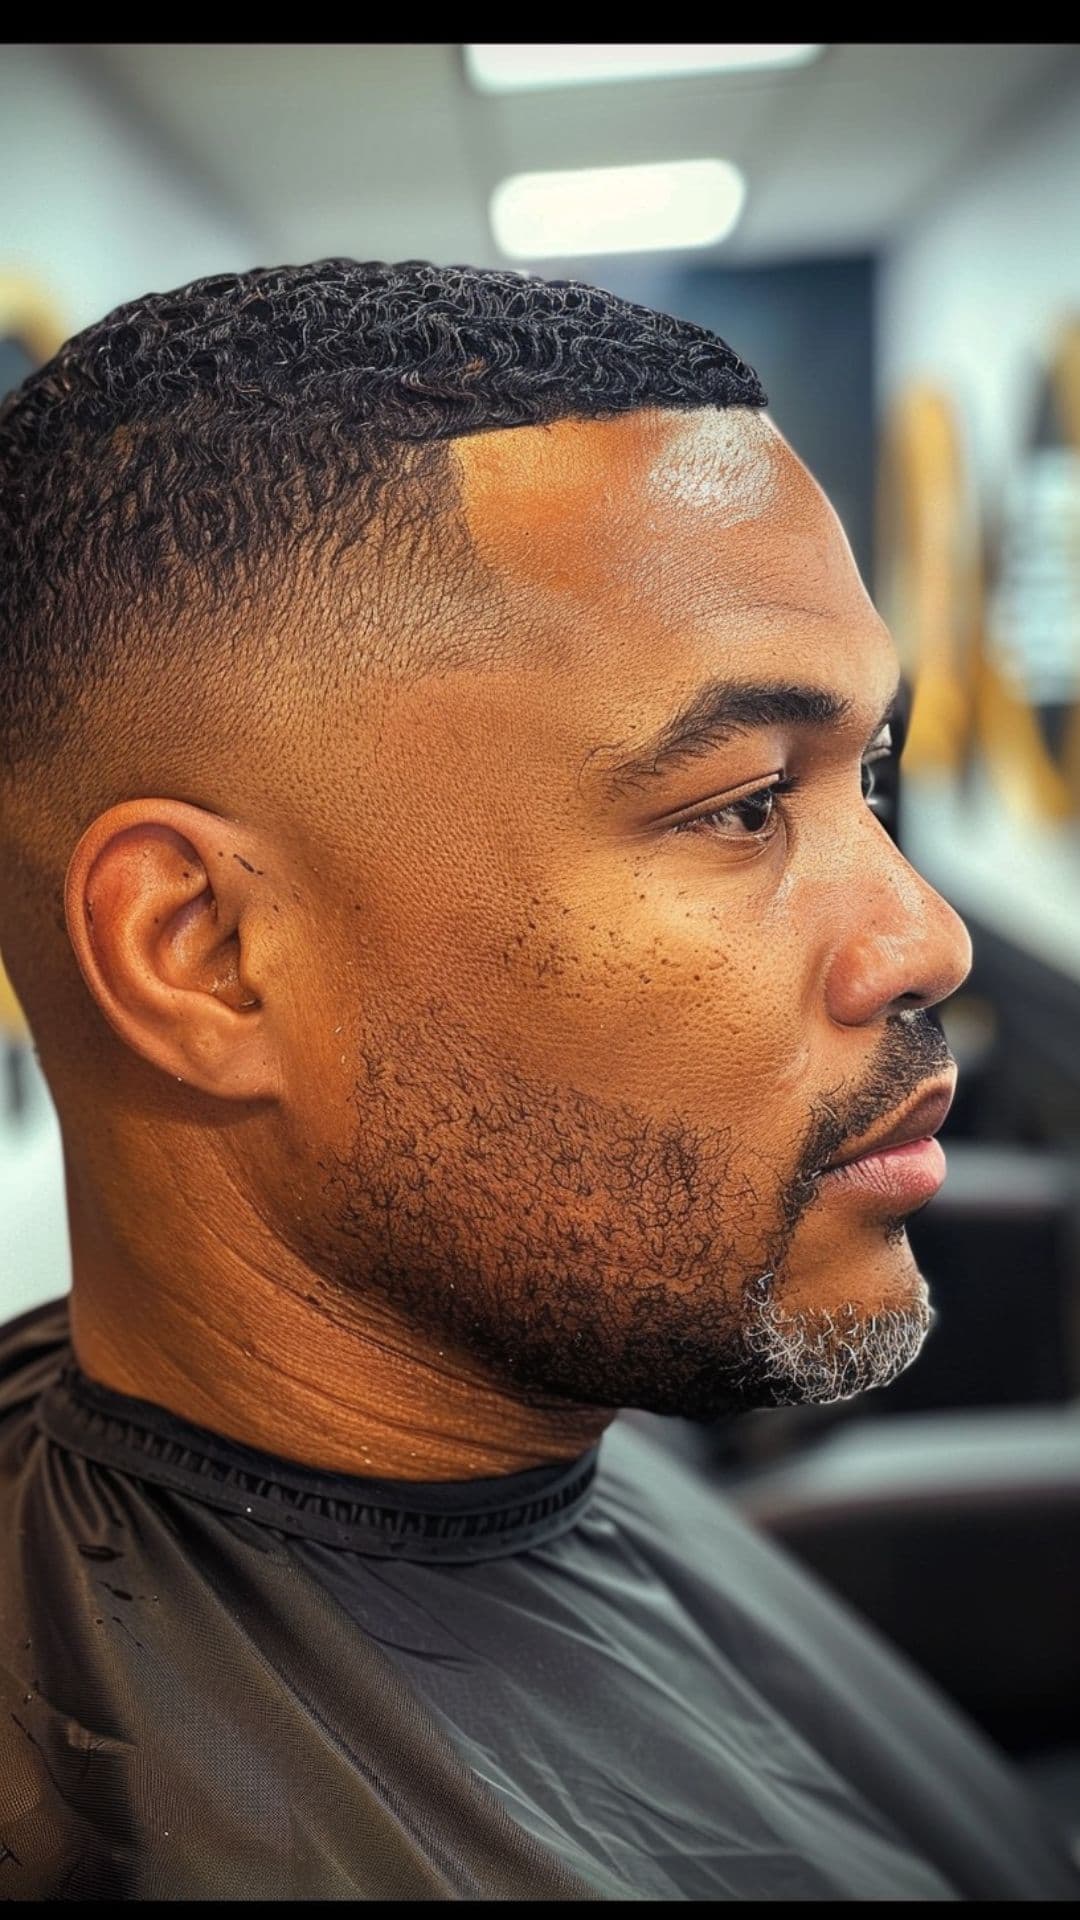 A black man modelling a bald fade haircut.